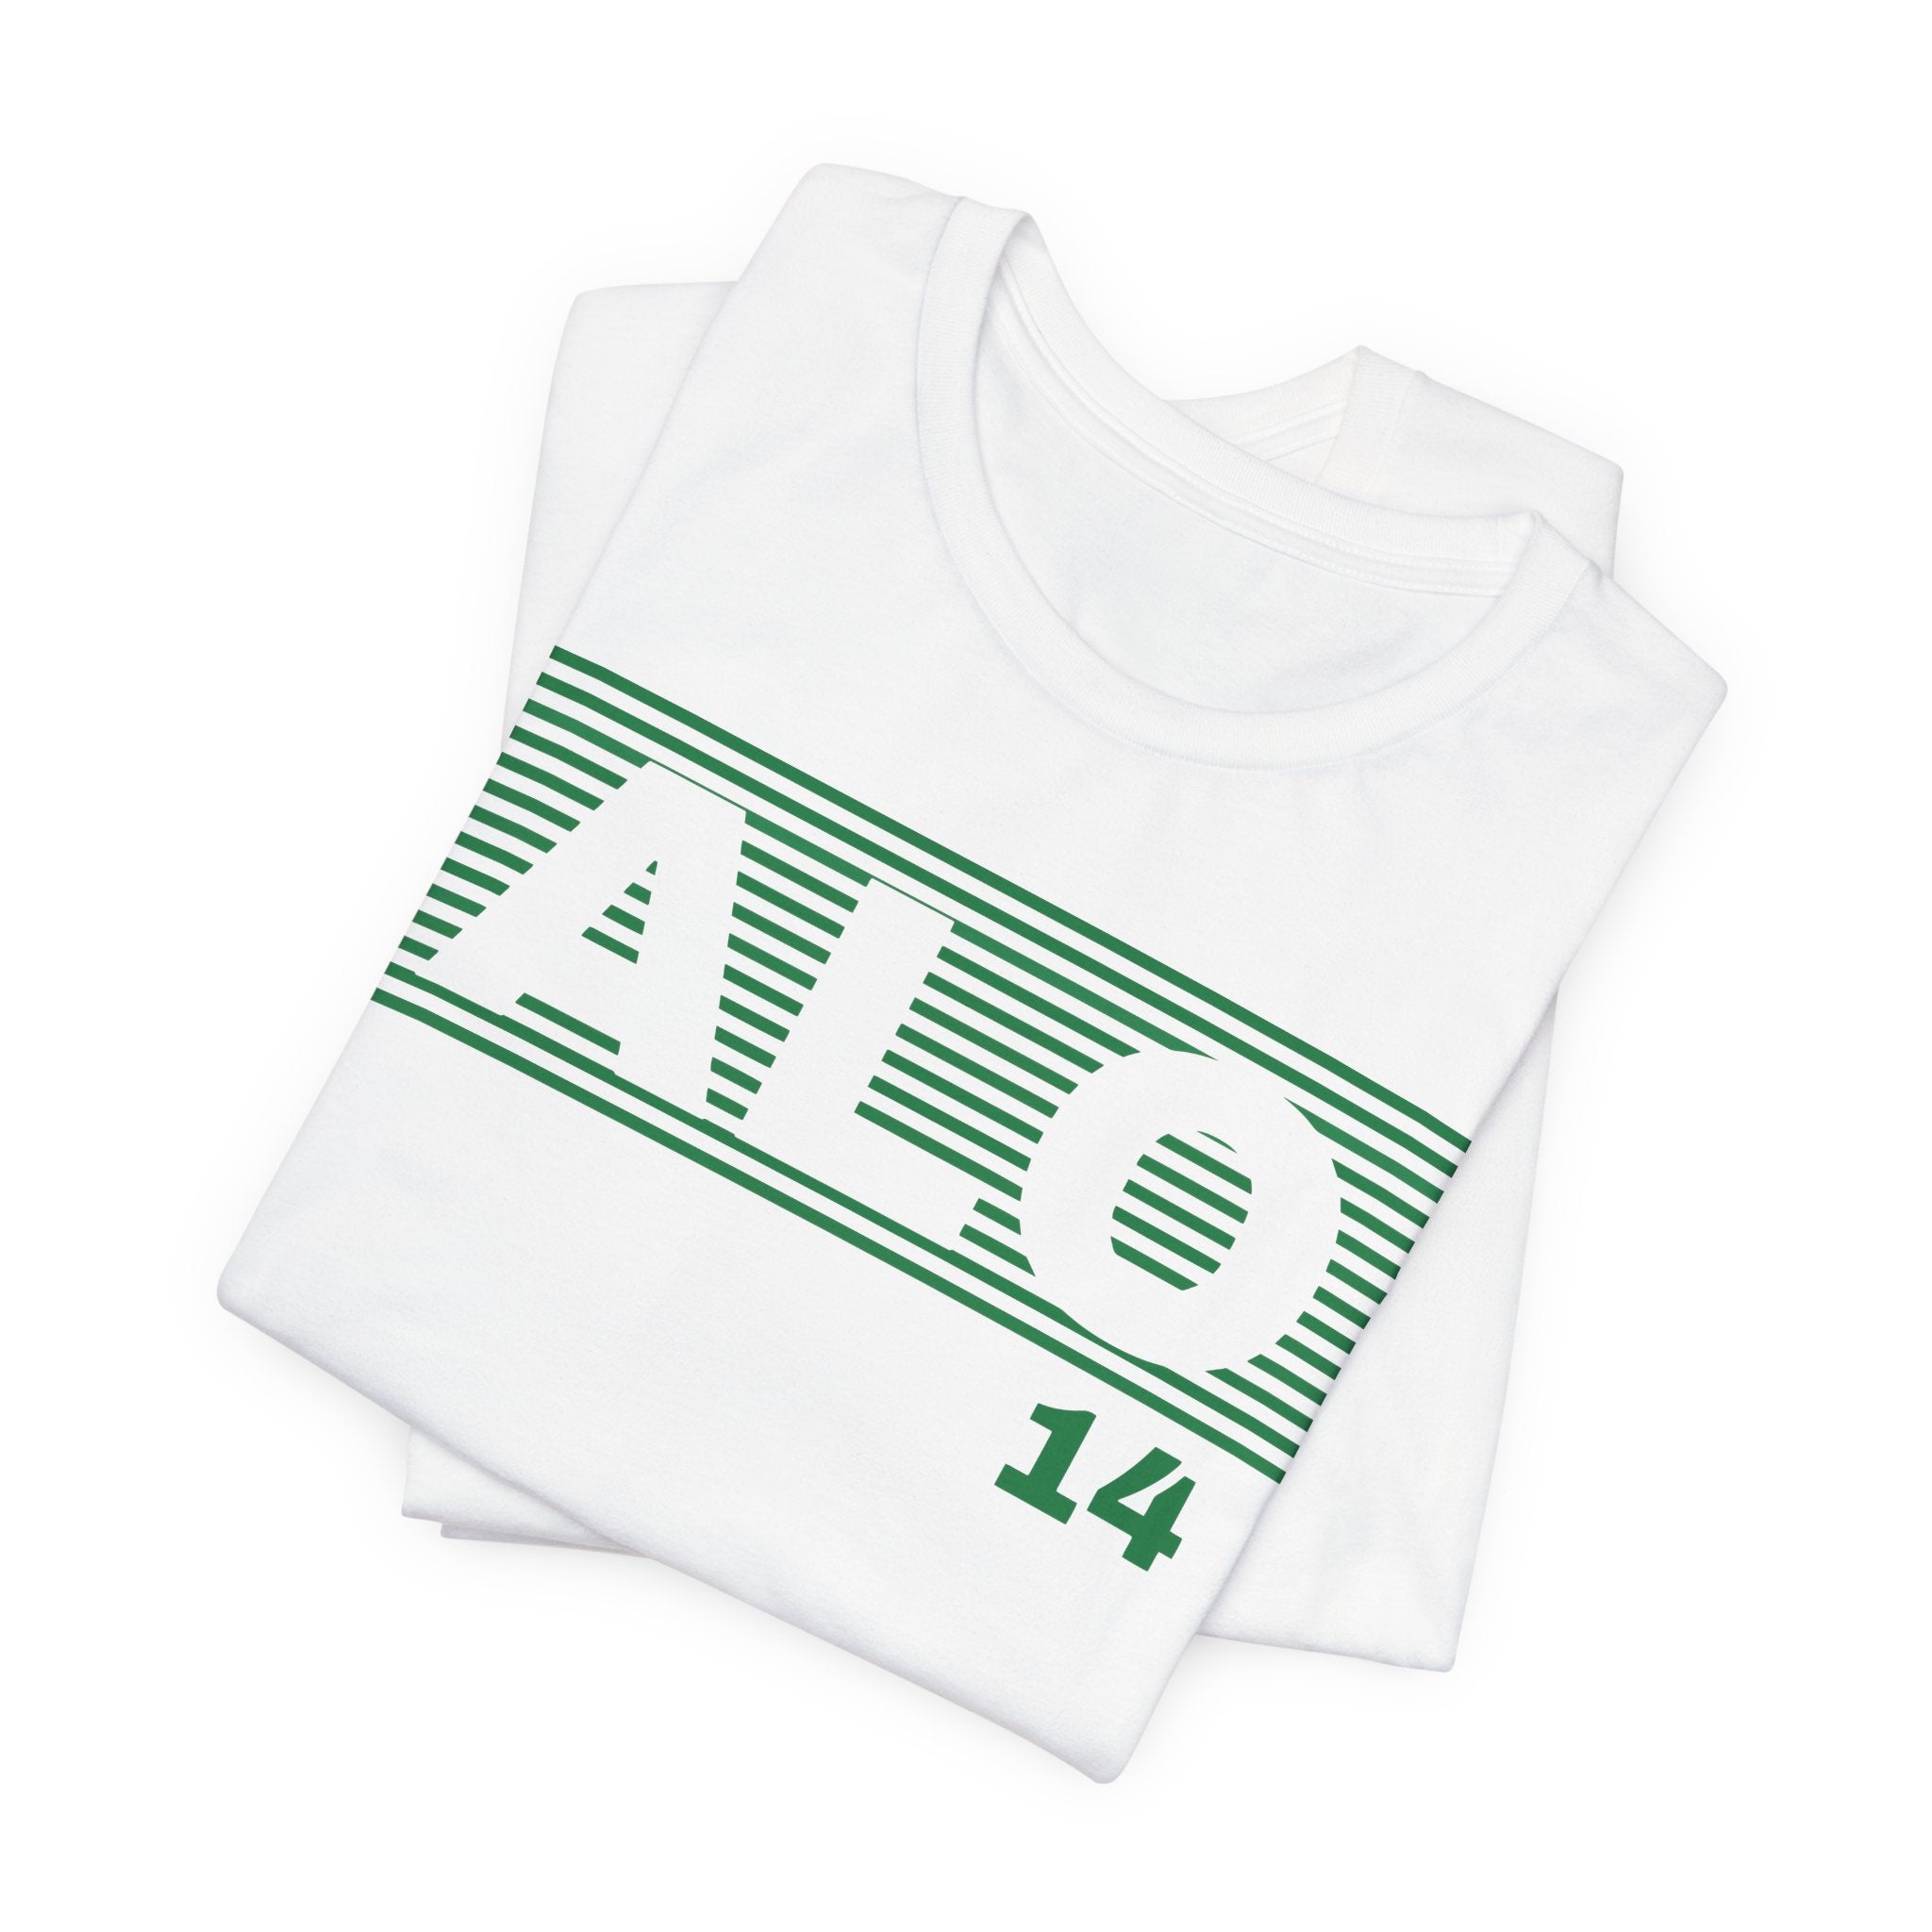 ALO14 Stealth Graphic T-Shirt - FormulaFanatics